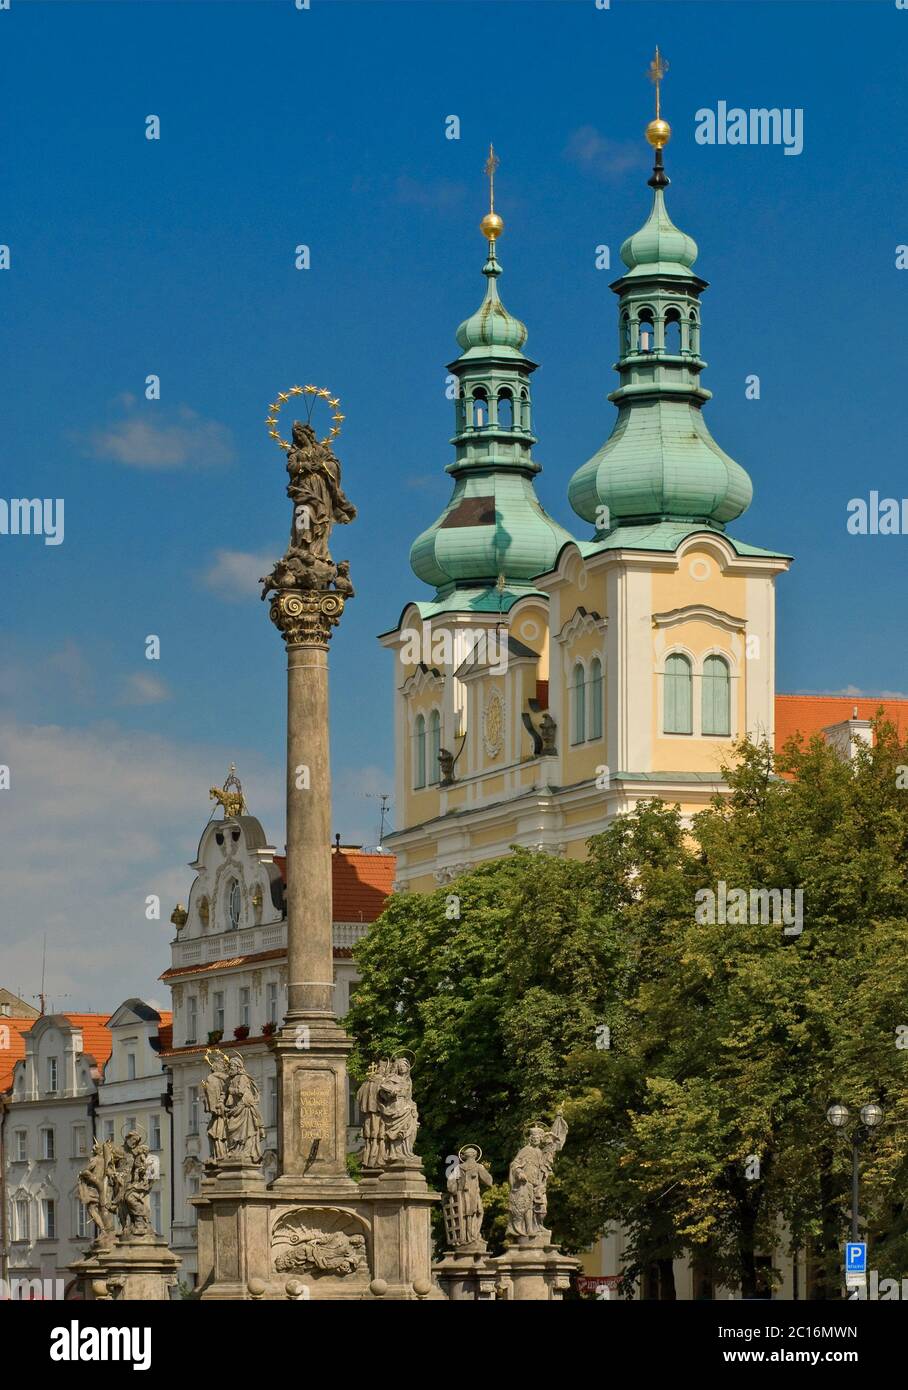 Die Kirche und die Pestsäule in Velke namesti in Hradec Králové in Kralovehradecky kraj (Region Hradec Králové), Tschechische Republik Stockfoto